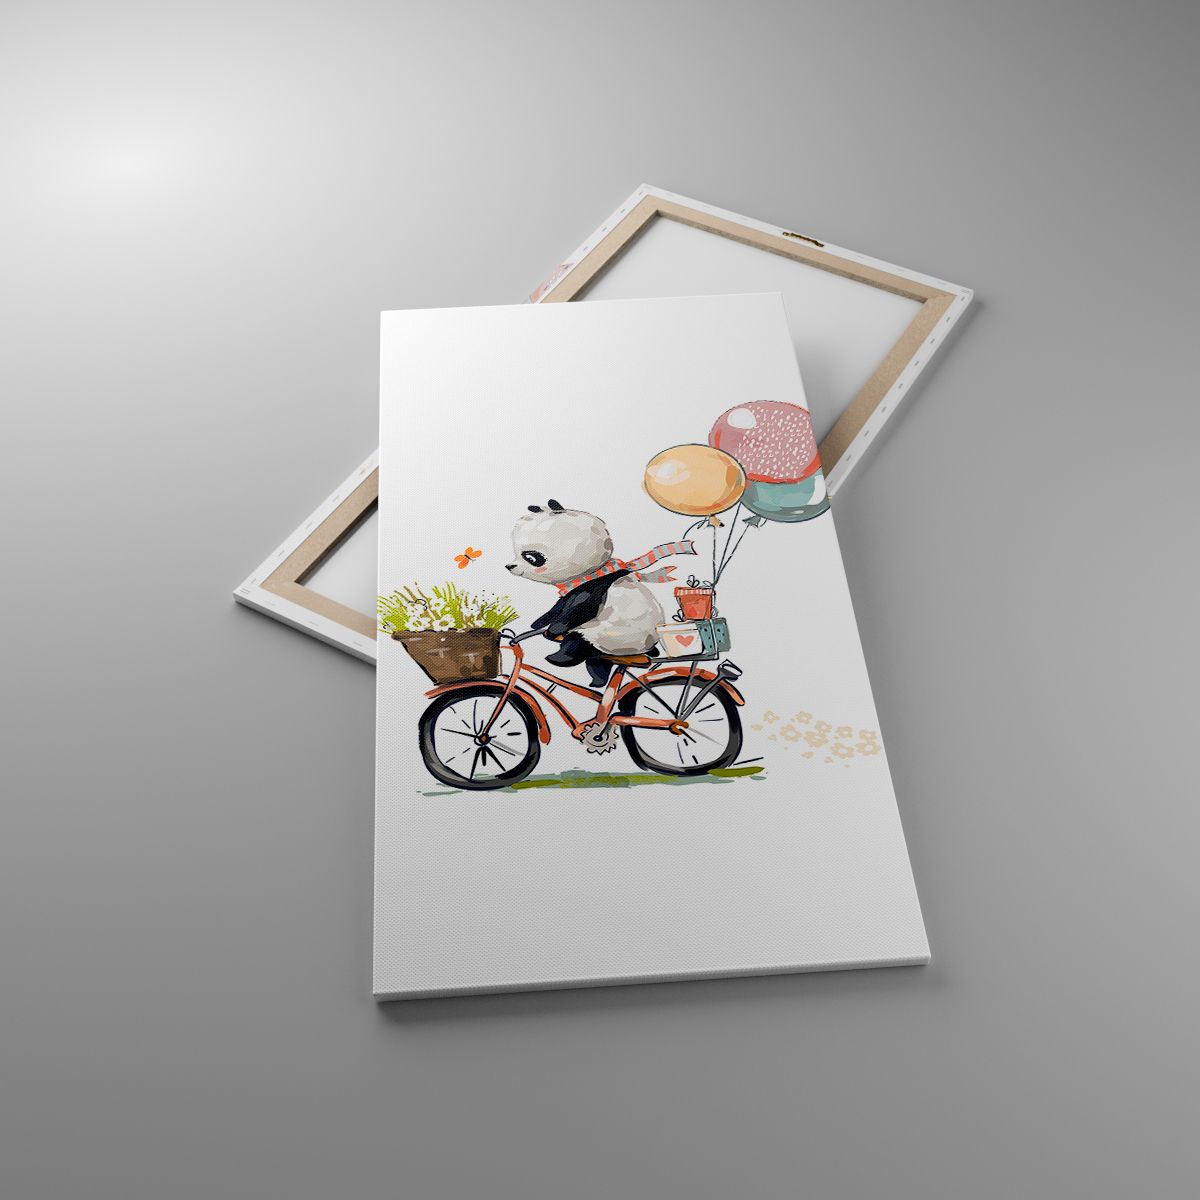 Leinwandbild Für Kinder, Leinwandbild Panda Auf Einem Fahrrad, Leinwandbild Abstraktion, Leinwandbild Bunte Luftballons, Leinwandbild Geschichte